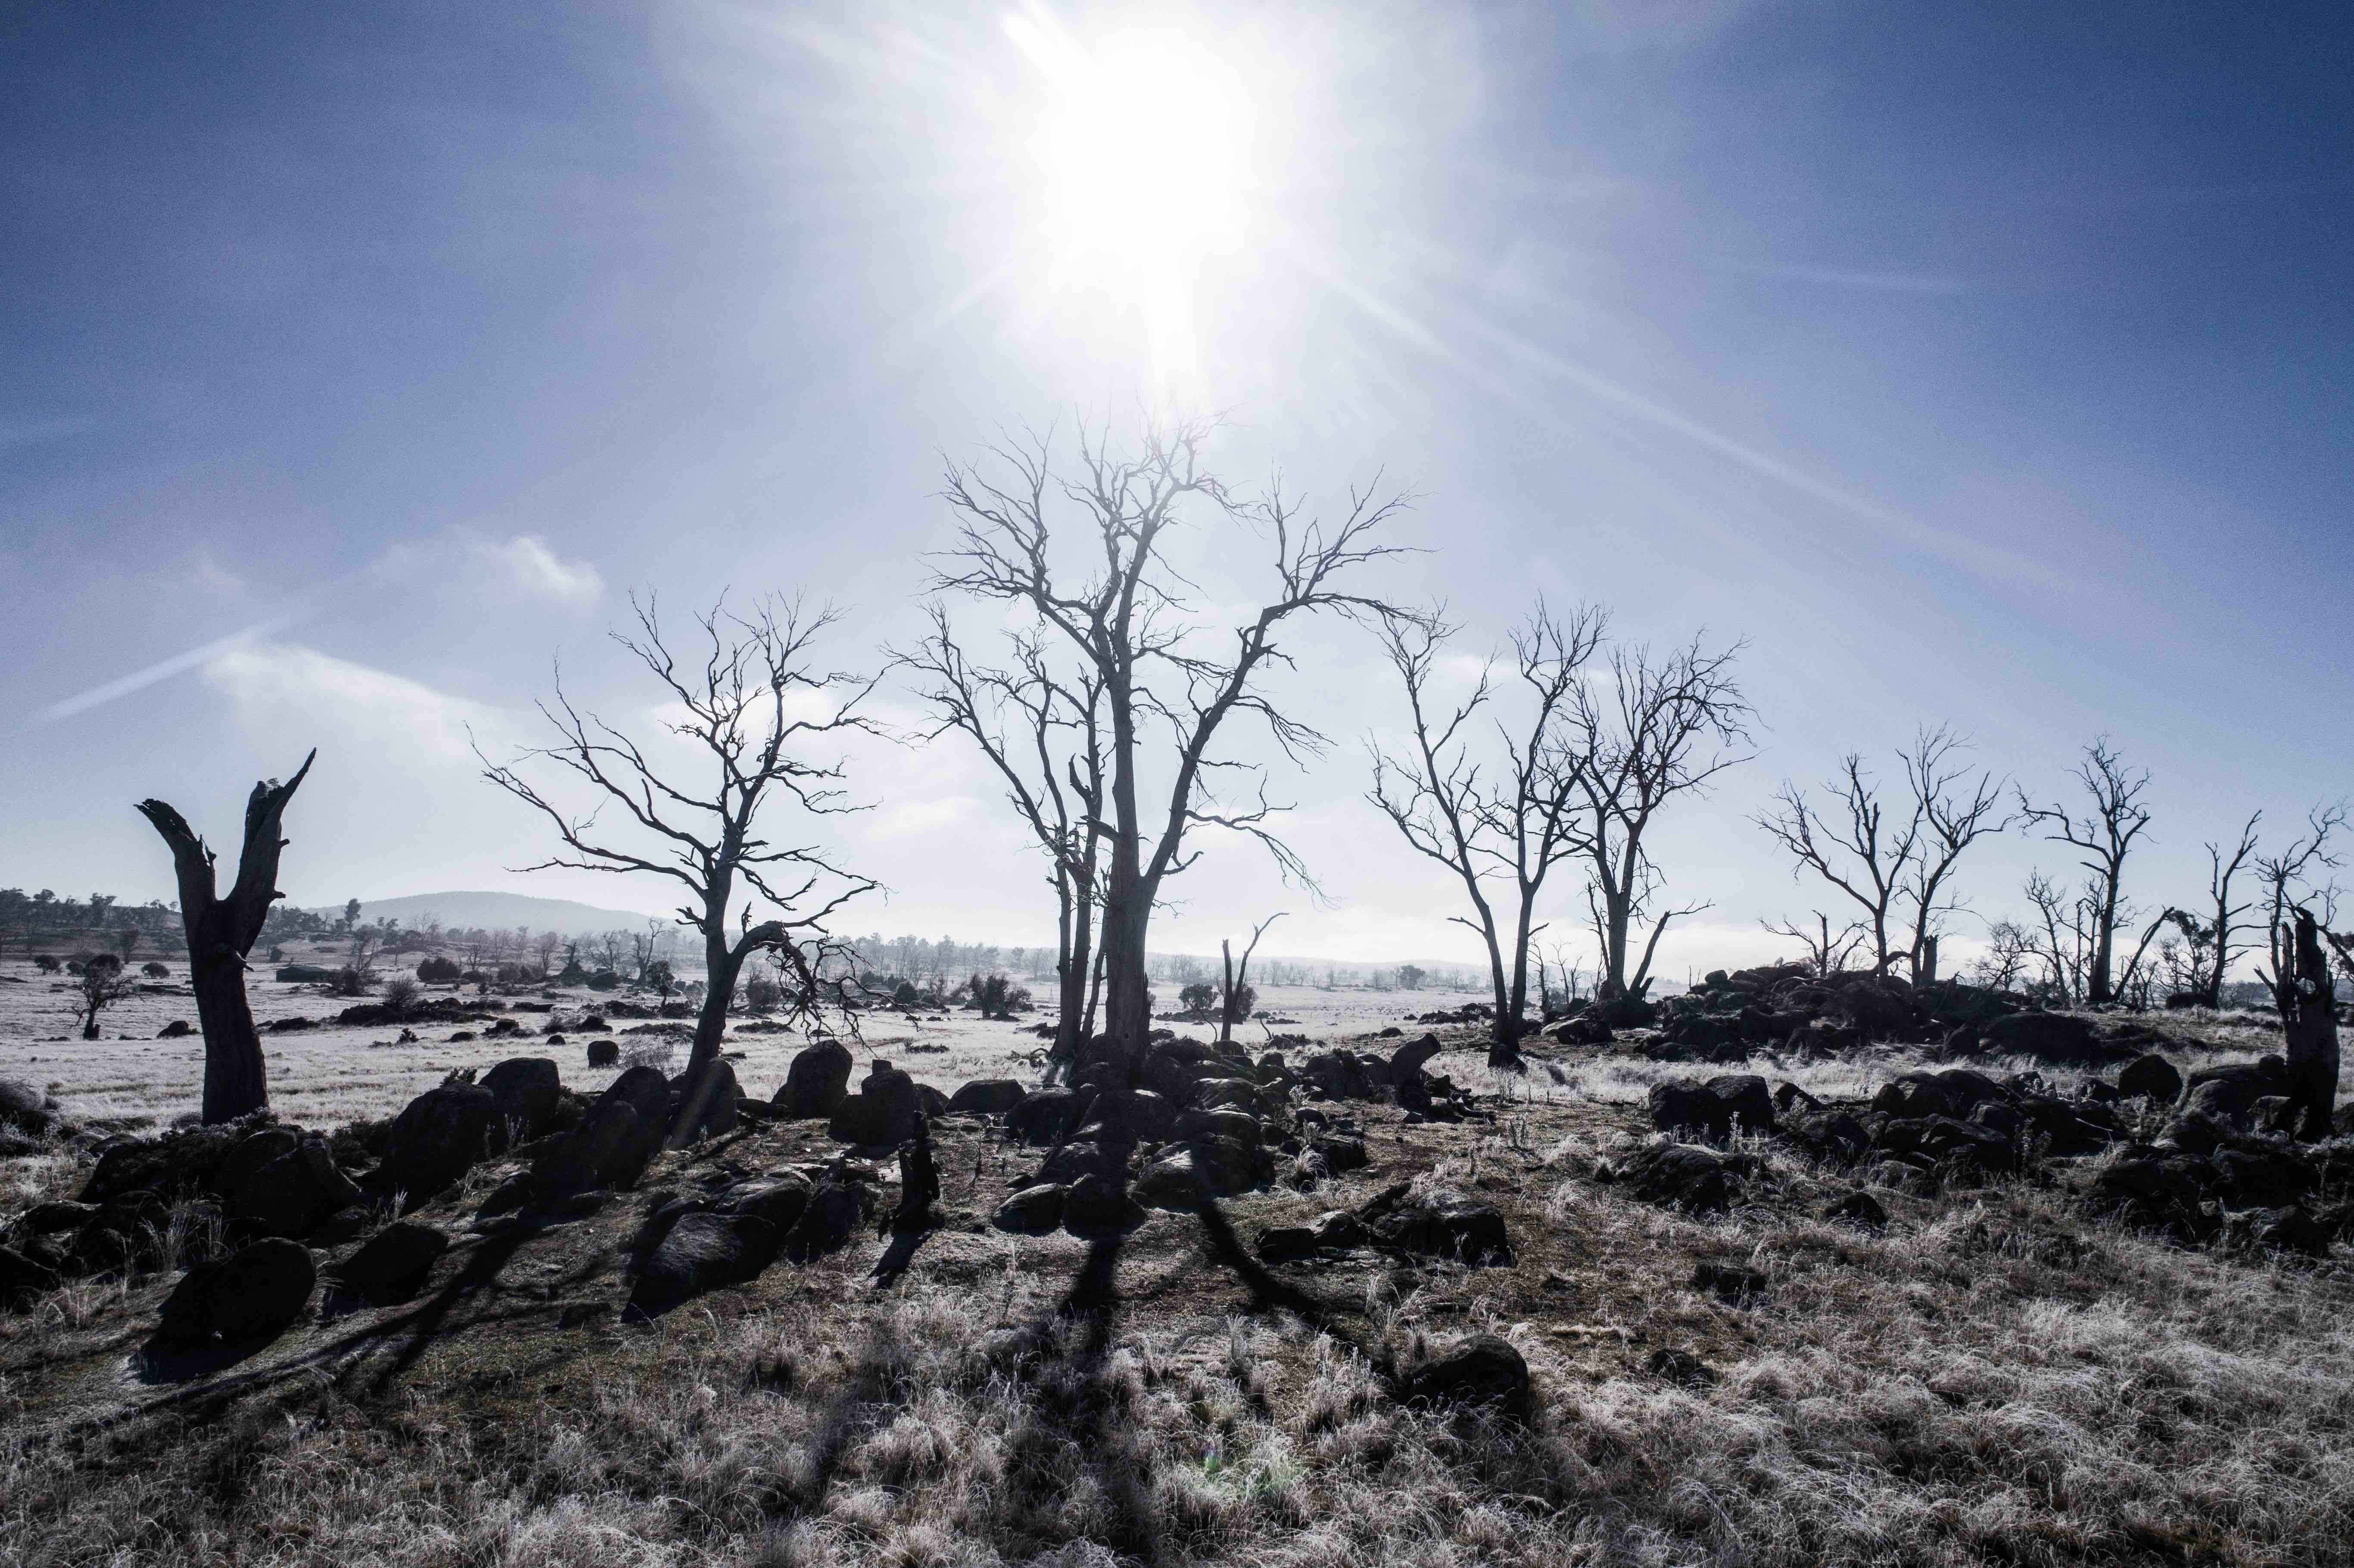 Monaro dieback is a devastating metaphor for climate change